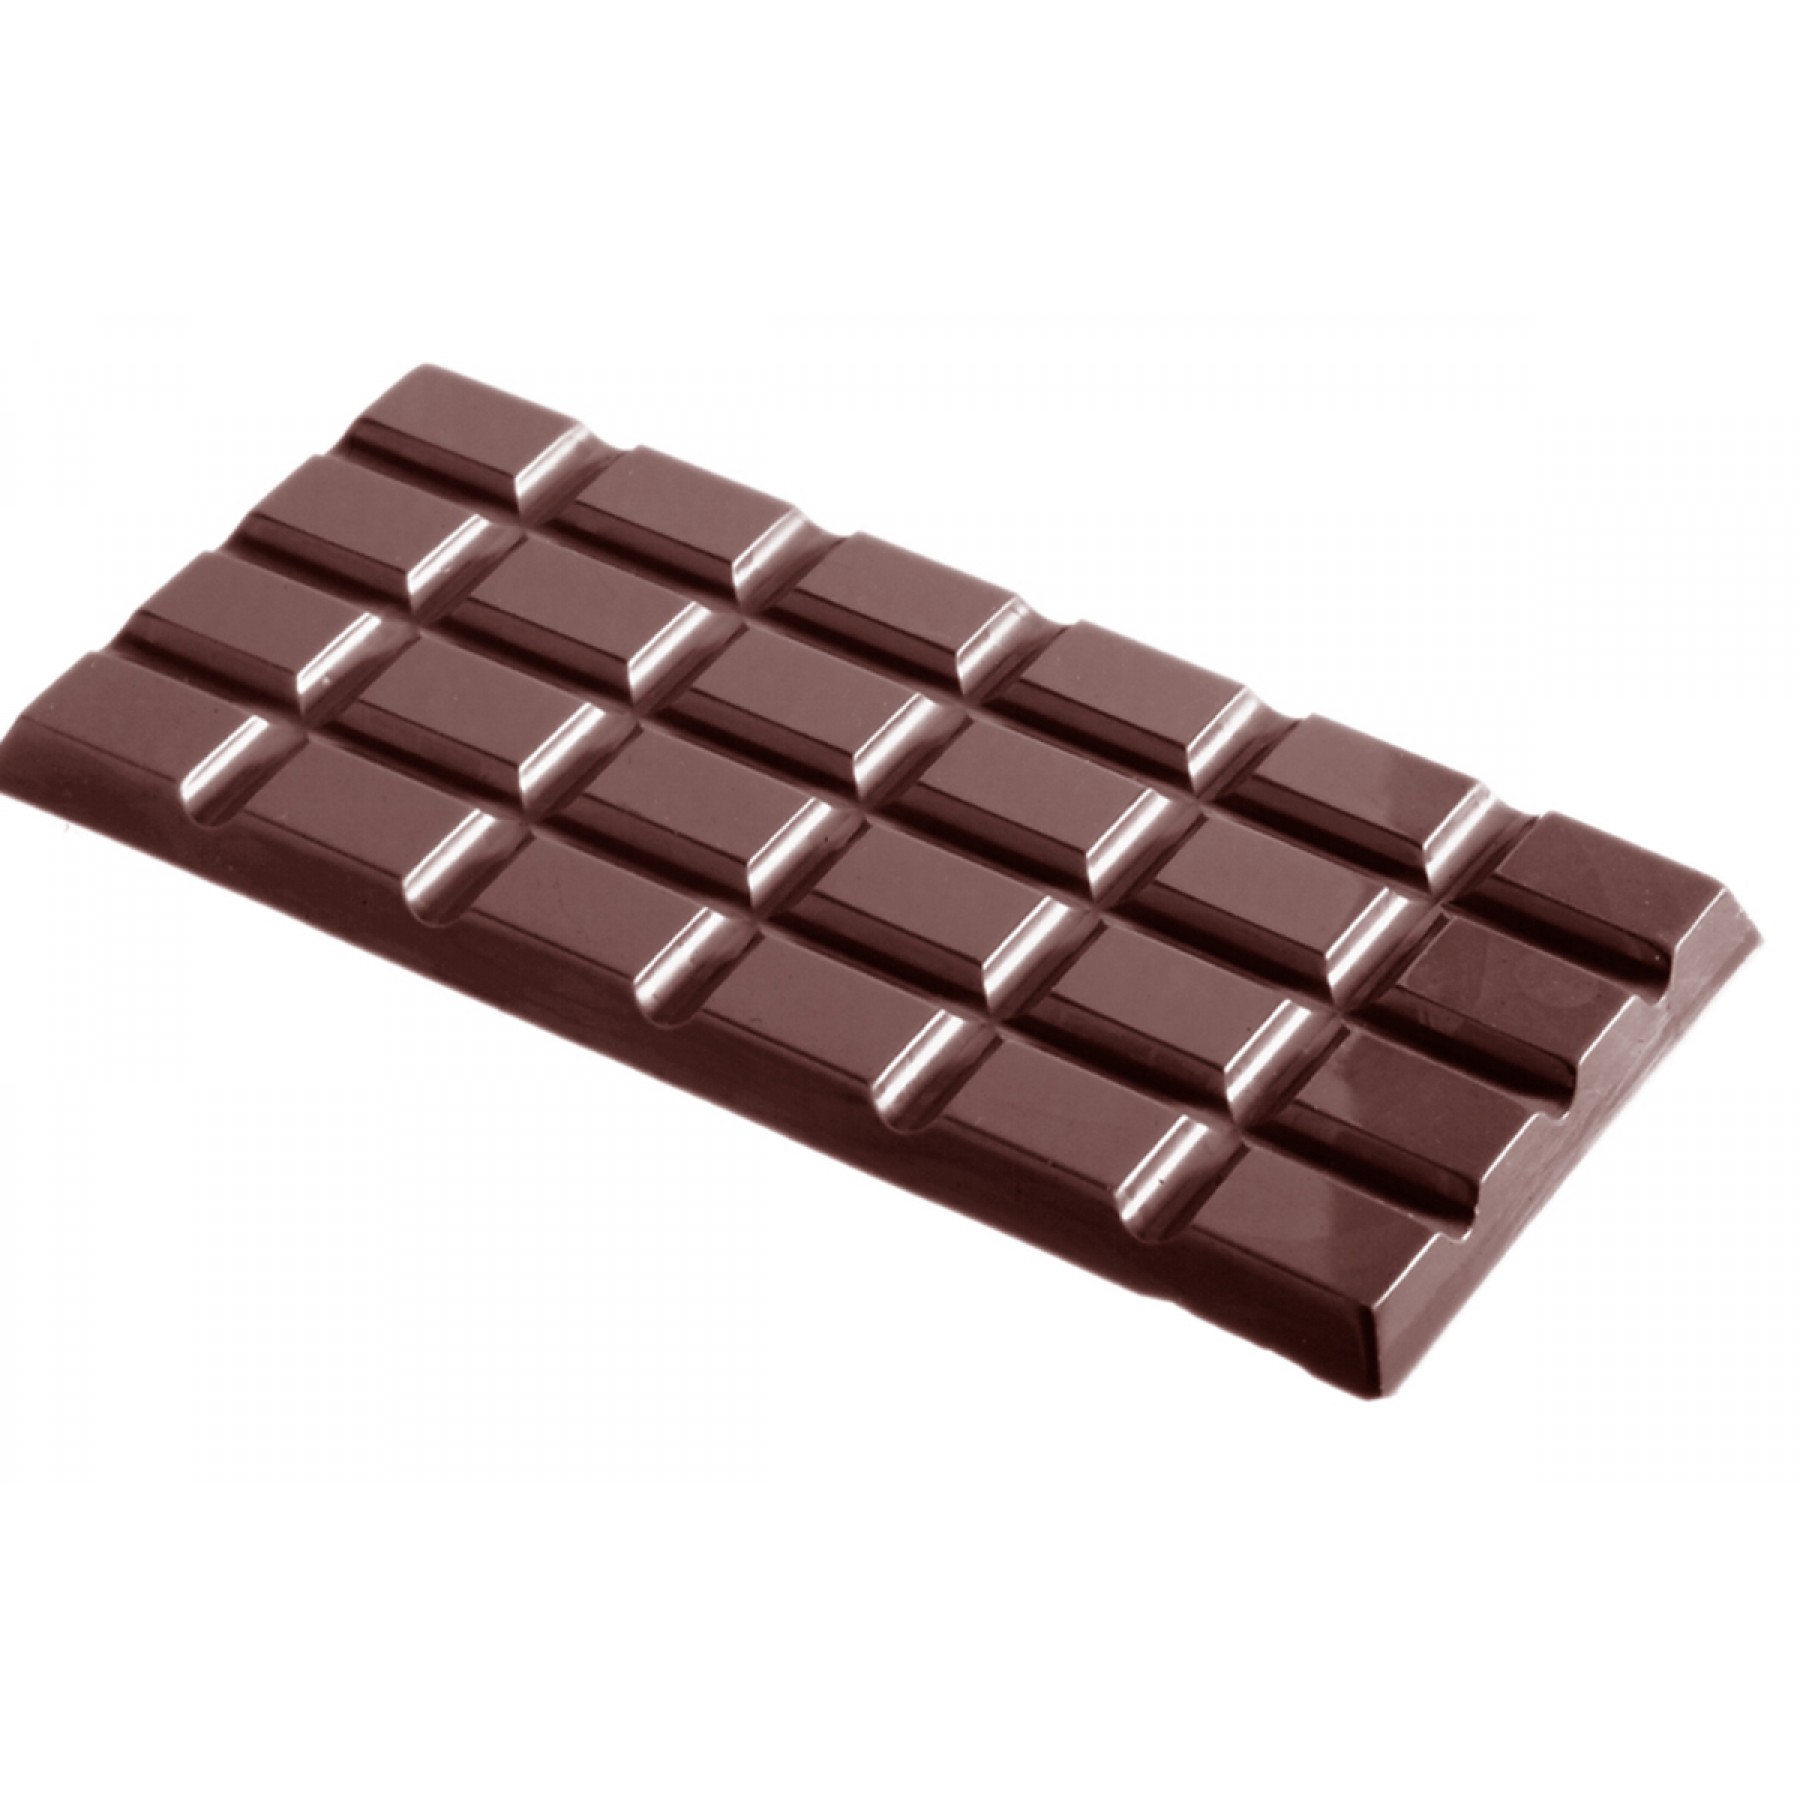 Форма для шоколада Tablet поликарбонатная CW2162, Chocolate World, Бельгия  | Фото — Магазин Andy Chef  1